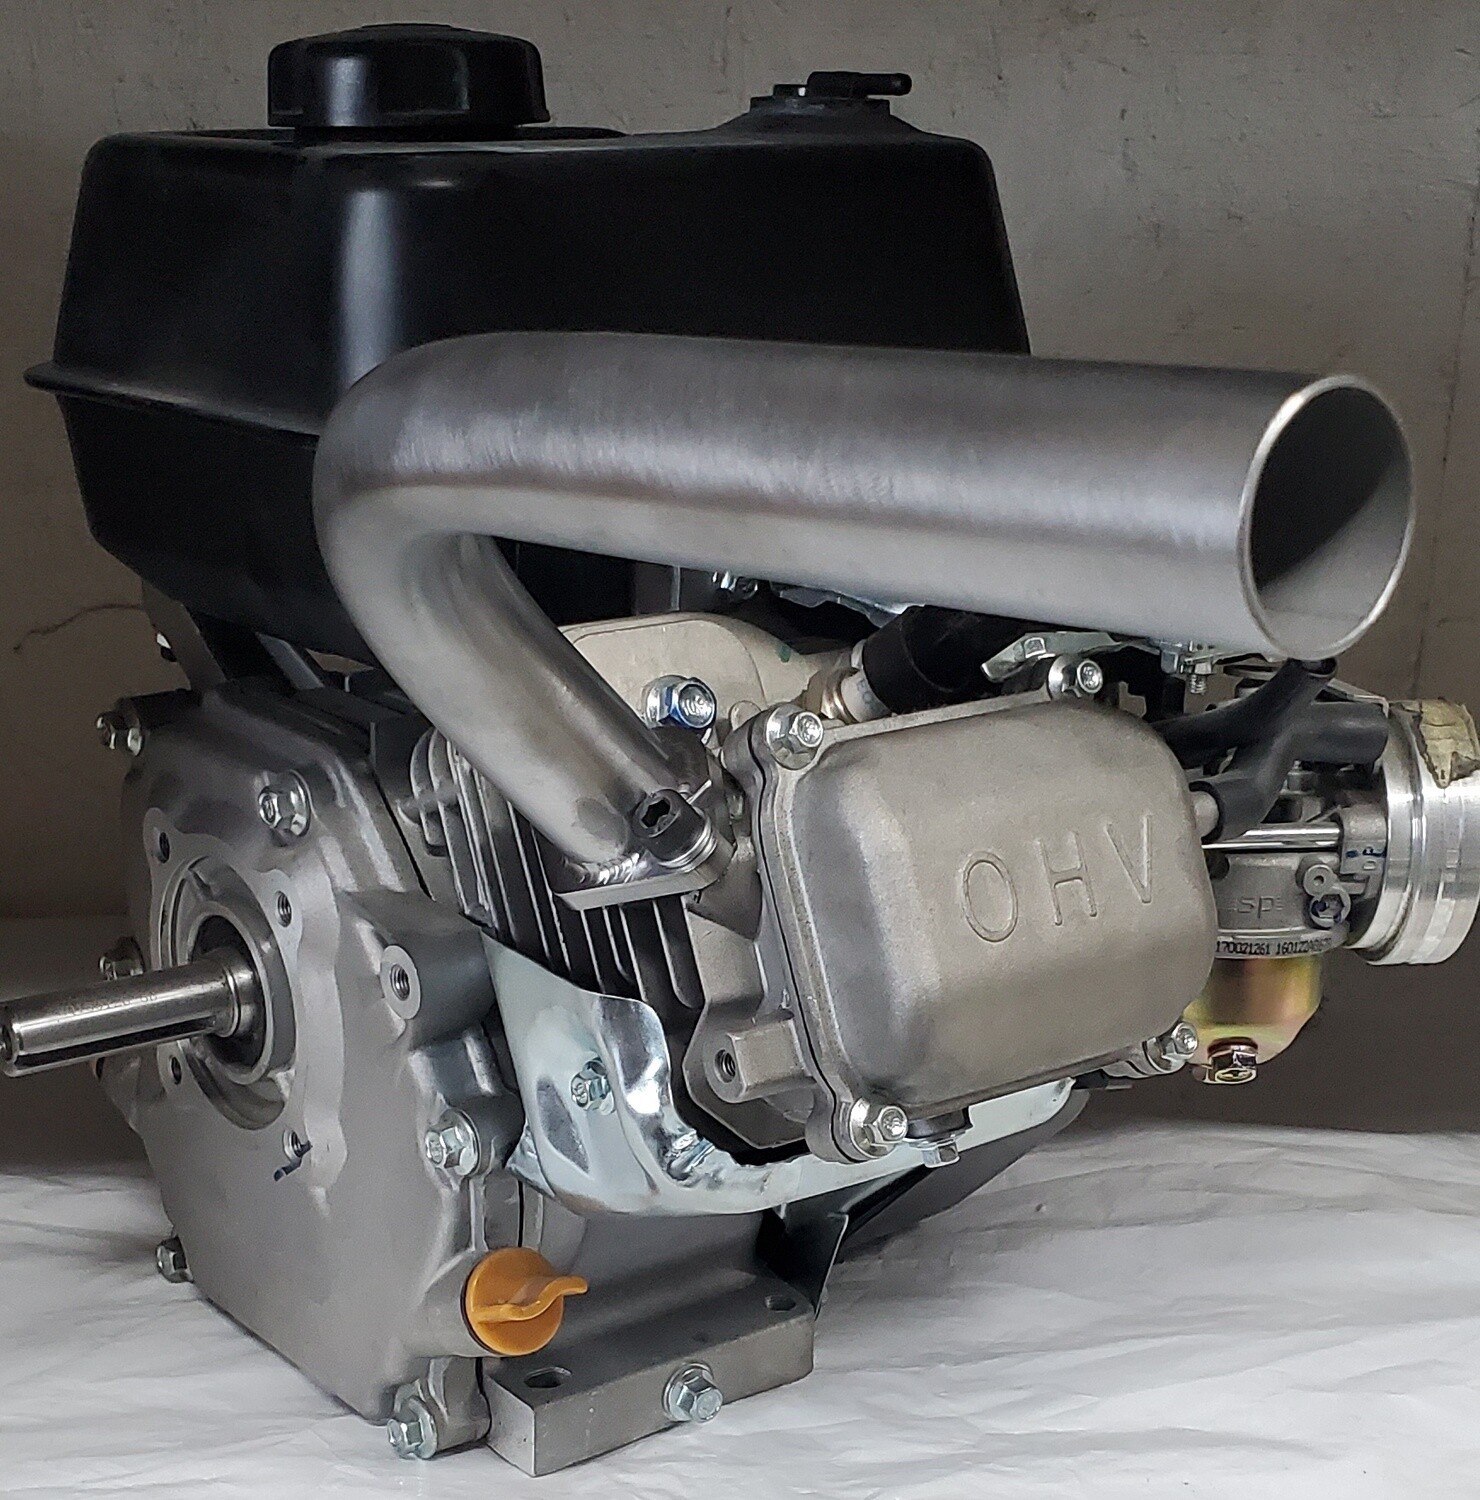 Drift Trike Performance Exhaust Header Pipe for:Predator 212cc,Honda GX160,GX200 